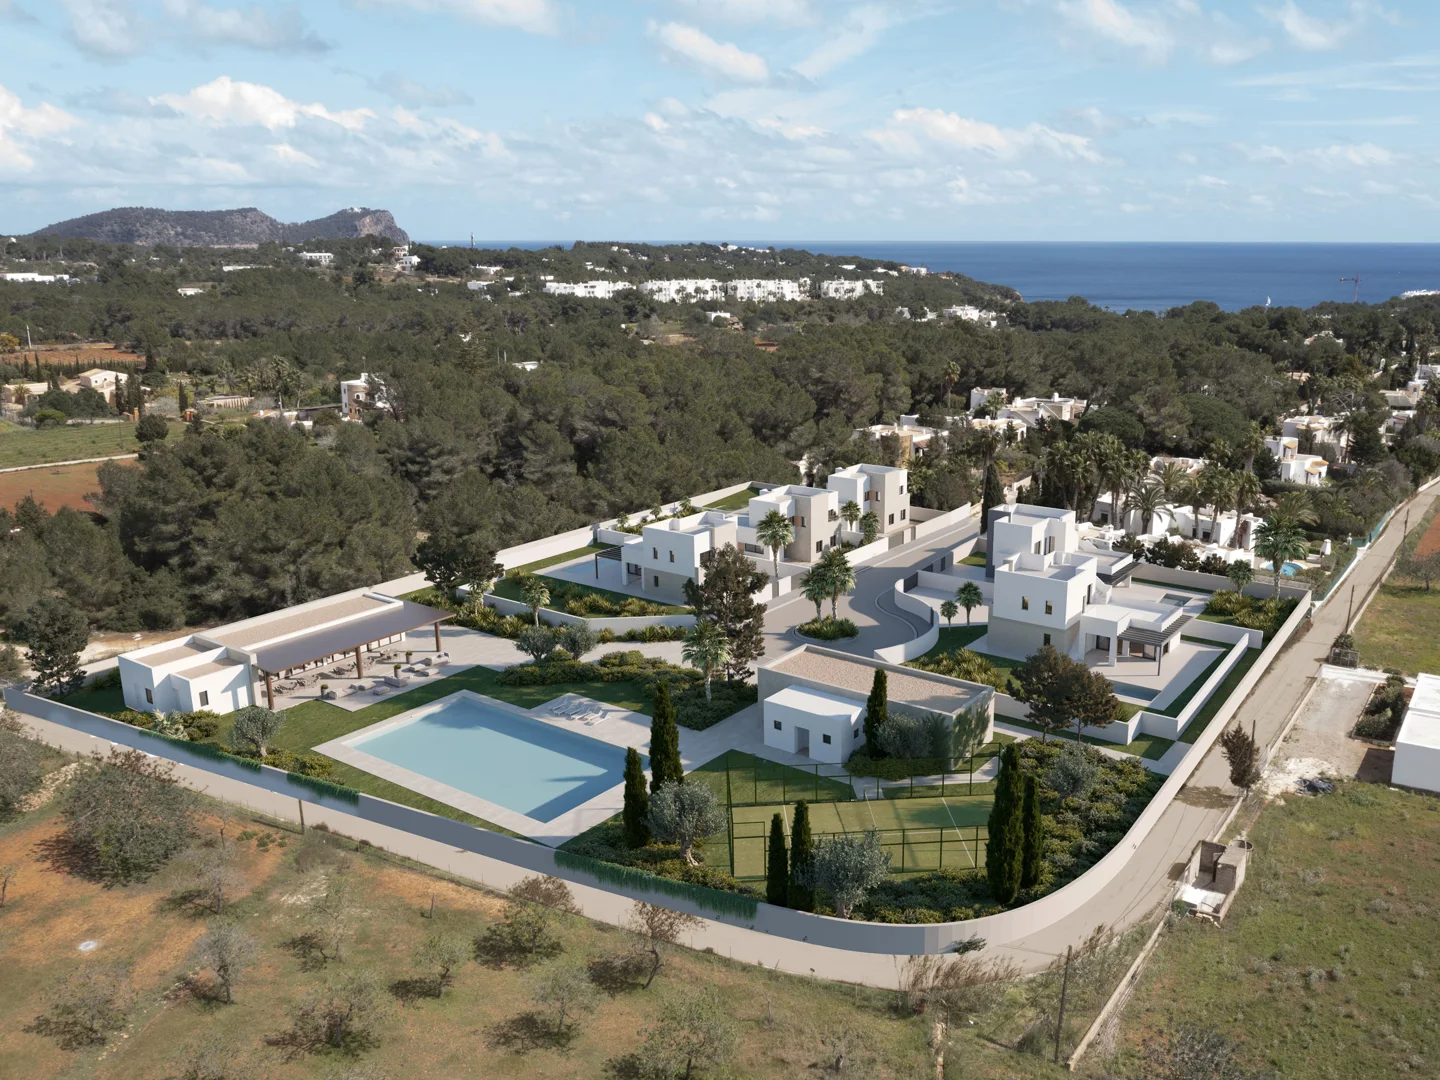 New build villas near the beach